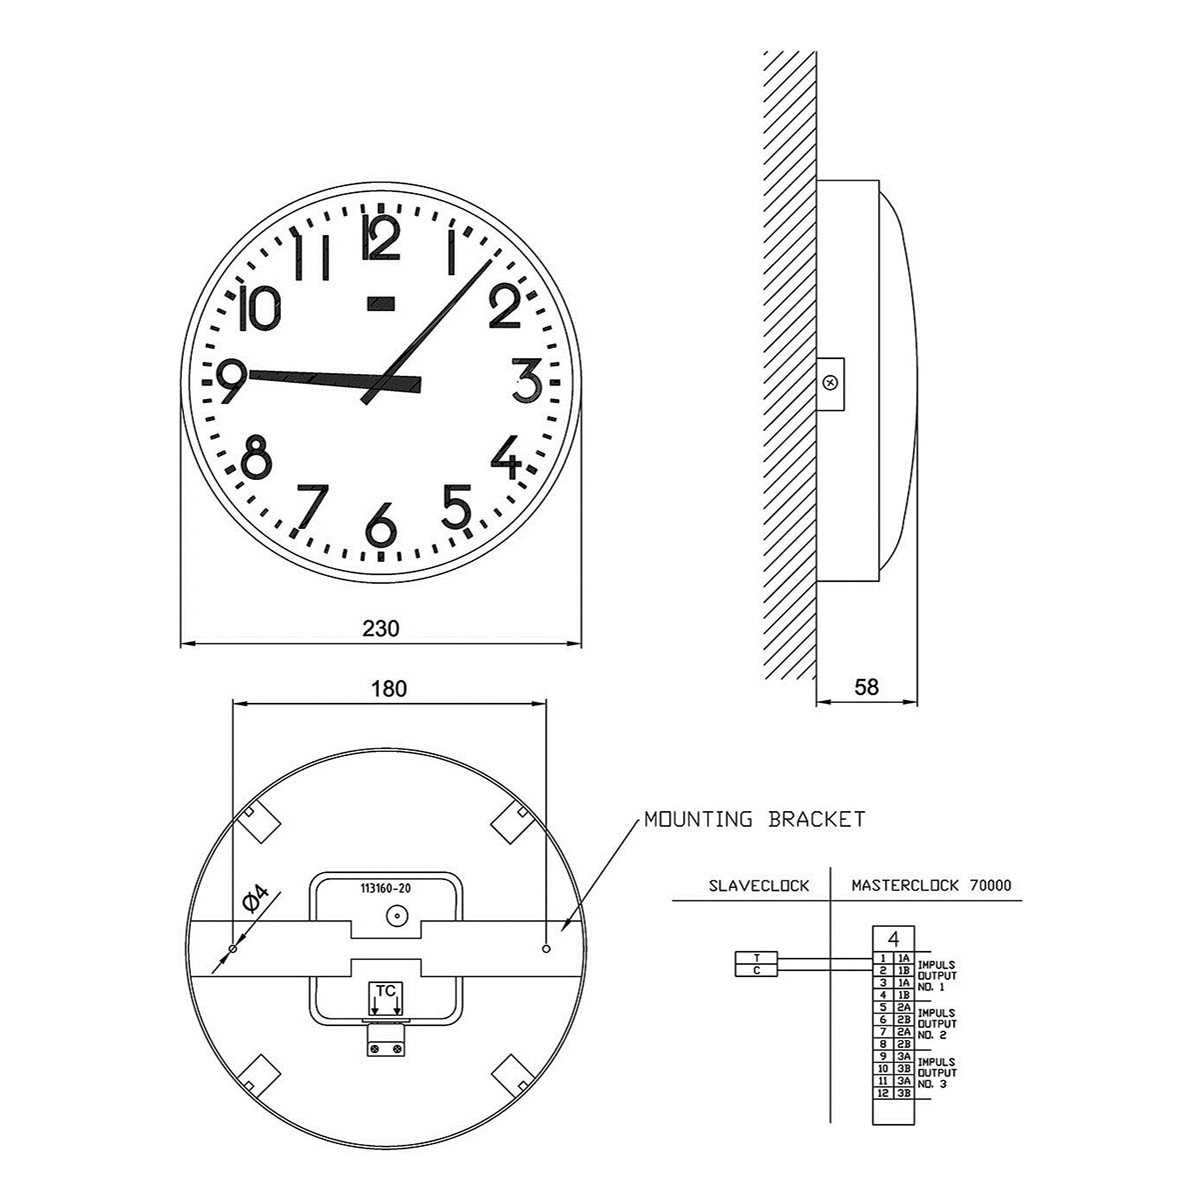 2021580-10 slave clock vingtor stentofon dimensions